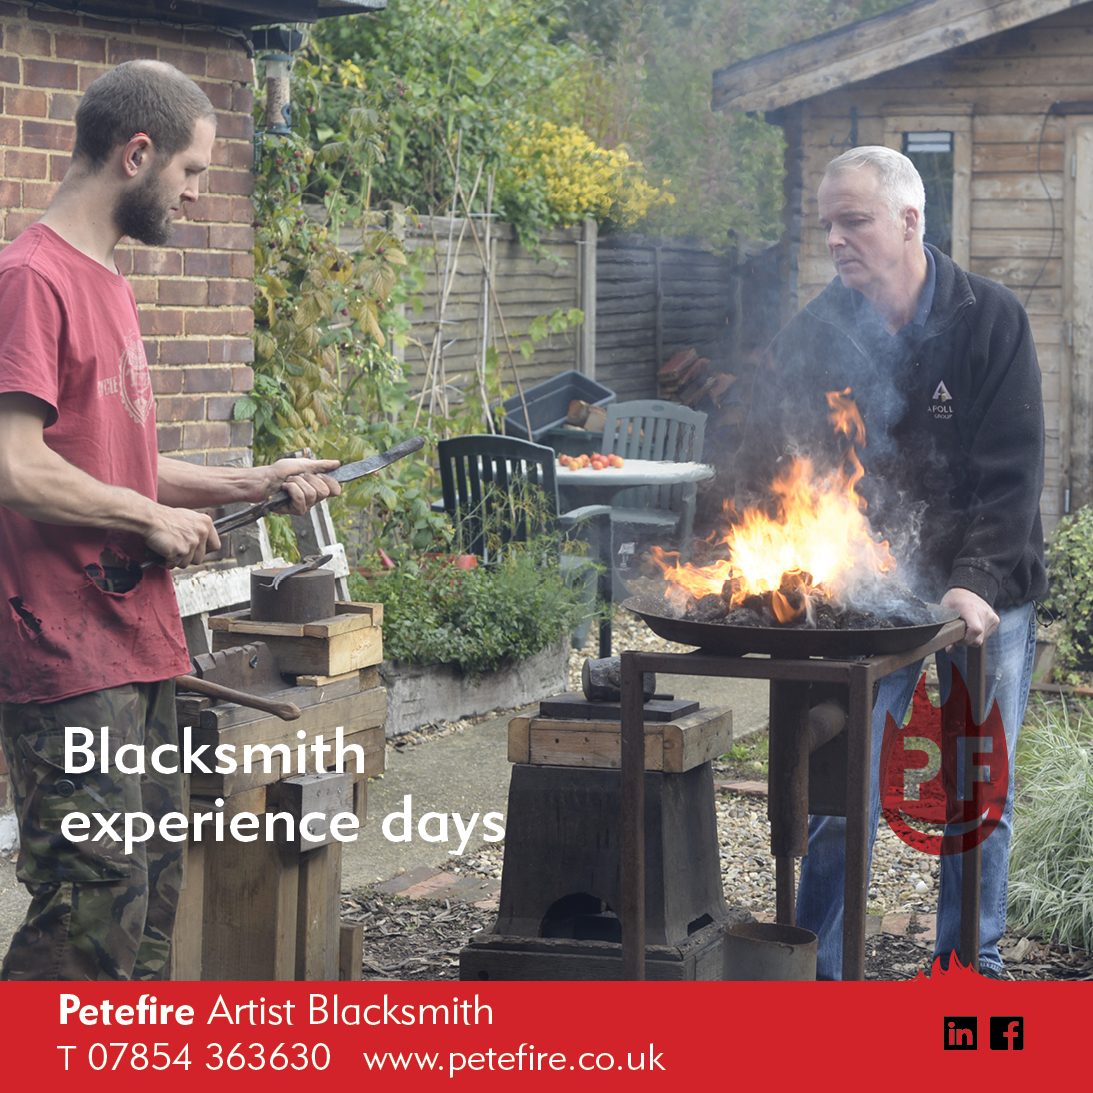 Petefire Artist Blacksmith, forging experience days